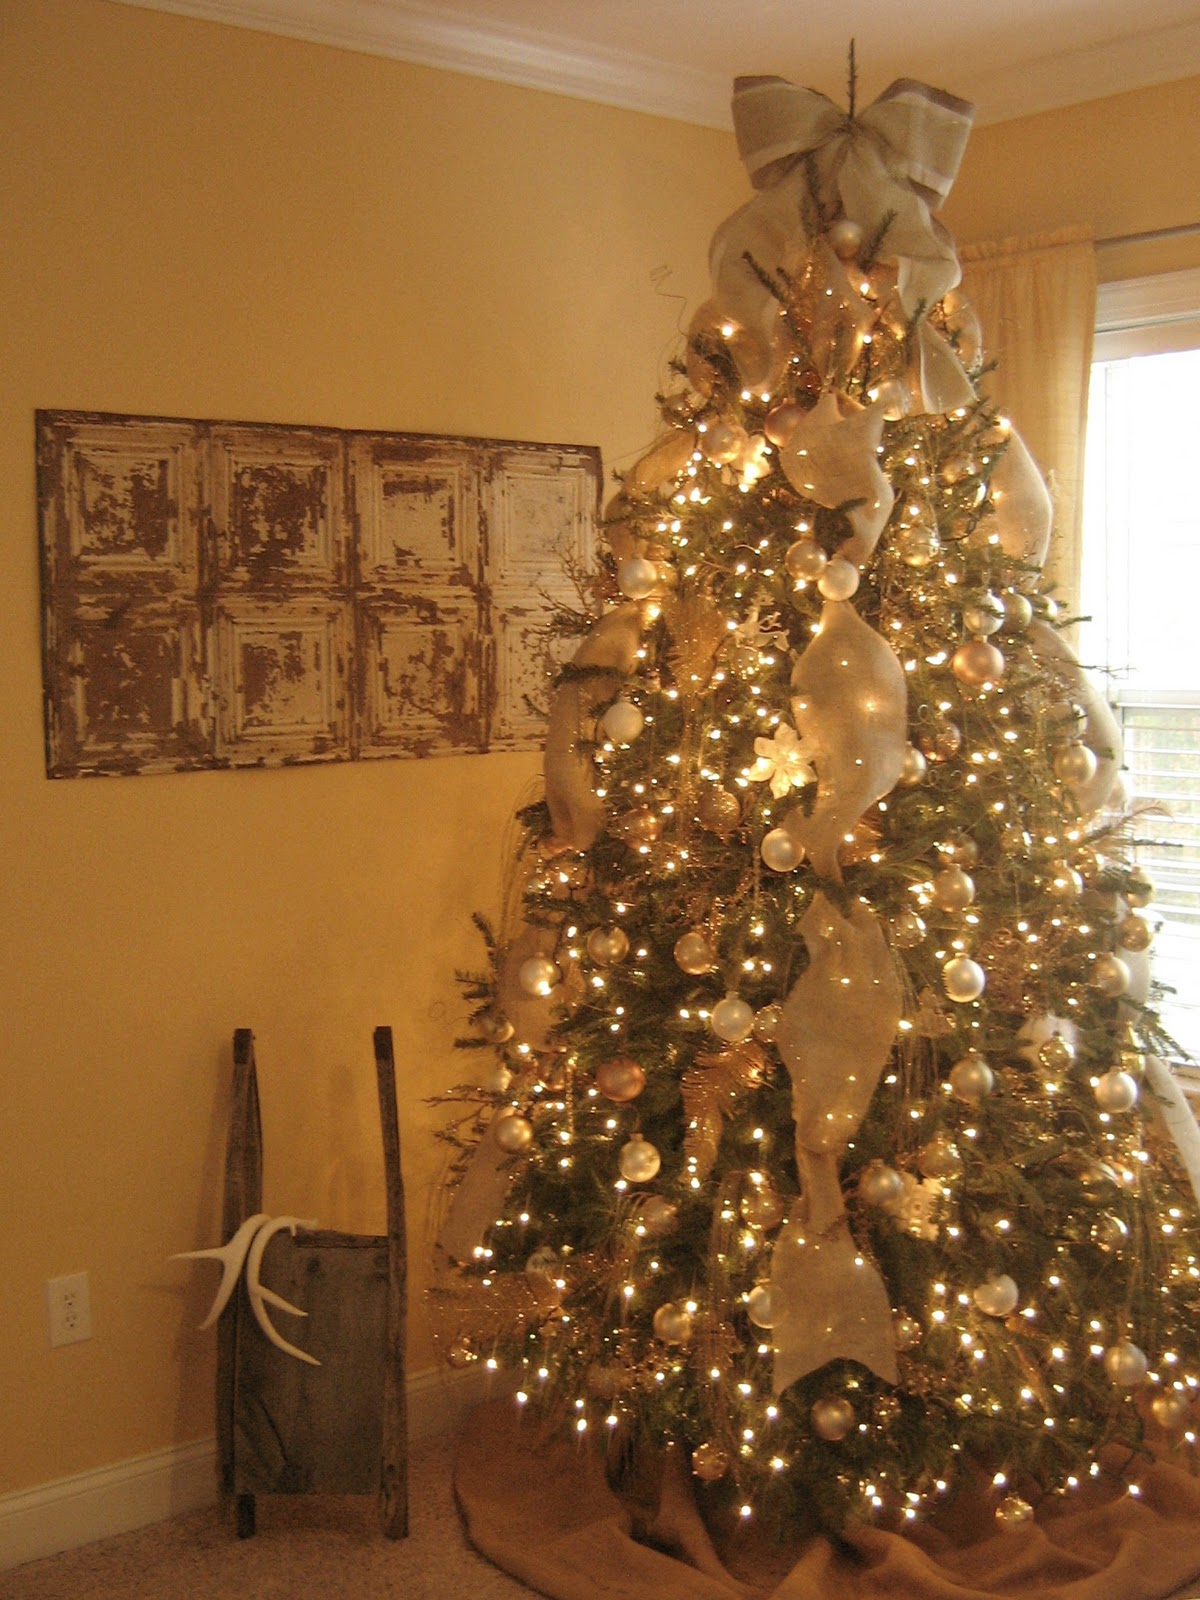  Christmas Joy!!! Burlap Inspired Christmas Tree! Vintage Rustic Cozy